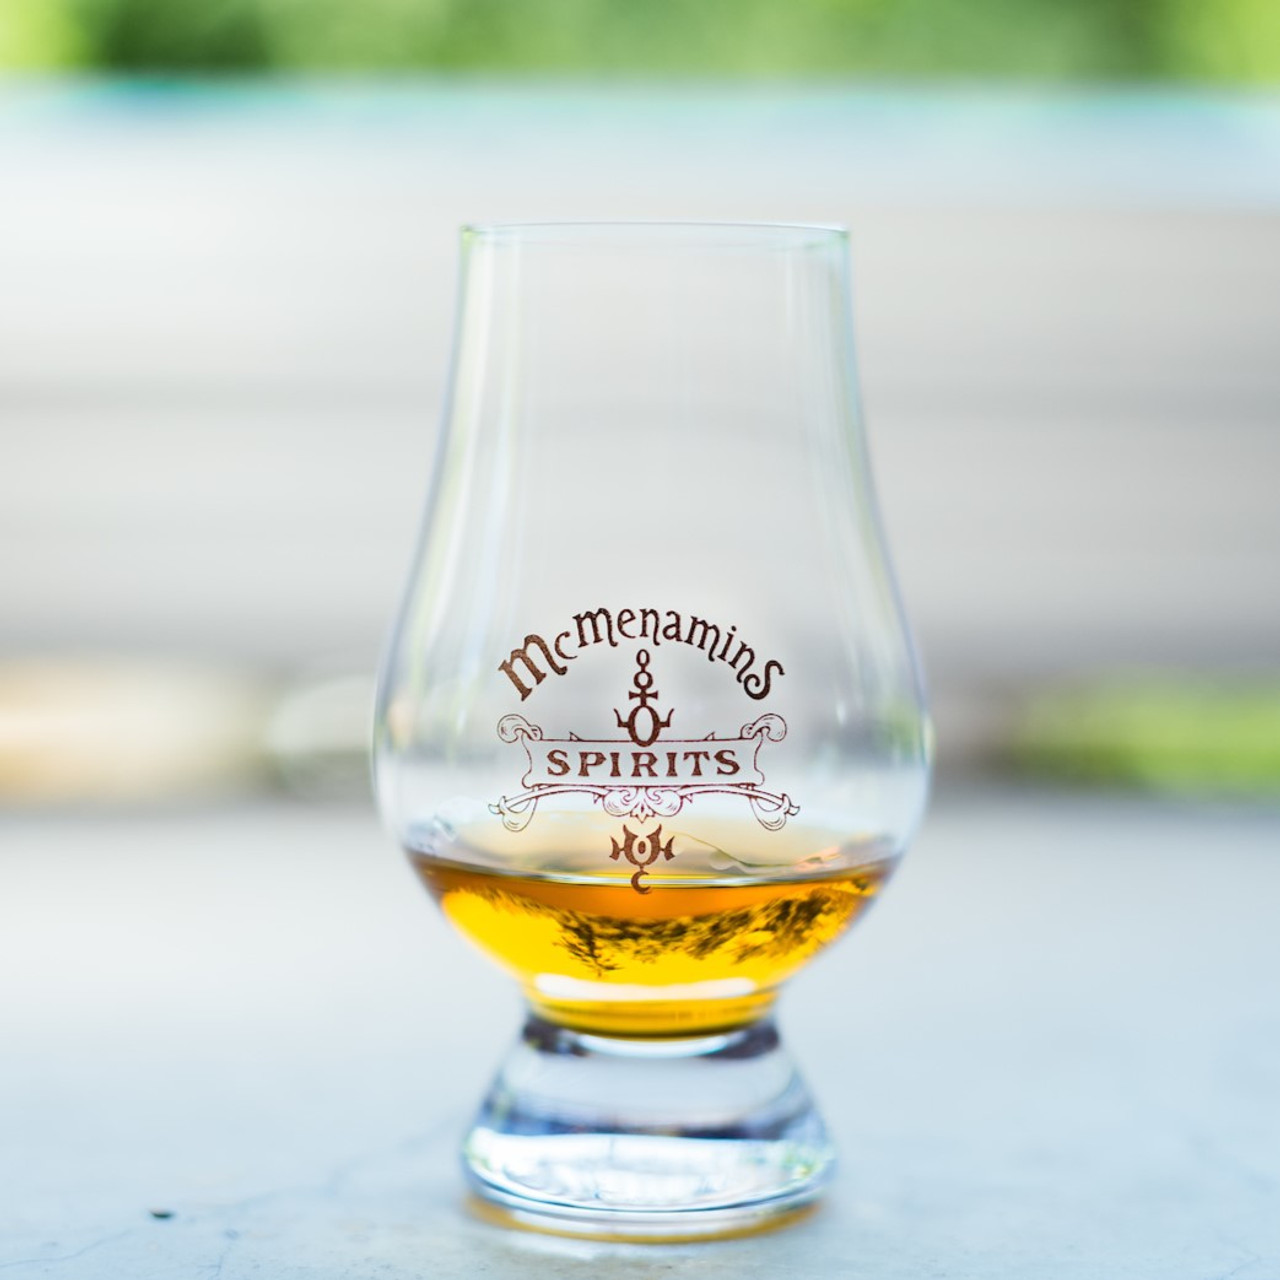 Crystal Whiskey Glass, Scotland Whisky Glass, Scotch Whisky, Whiskey Cup